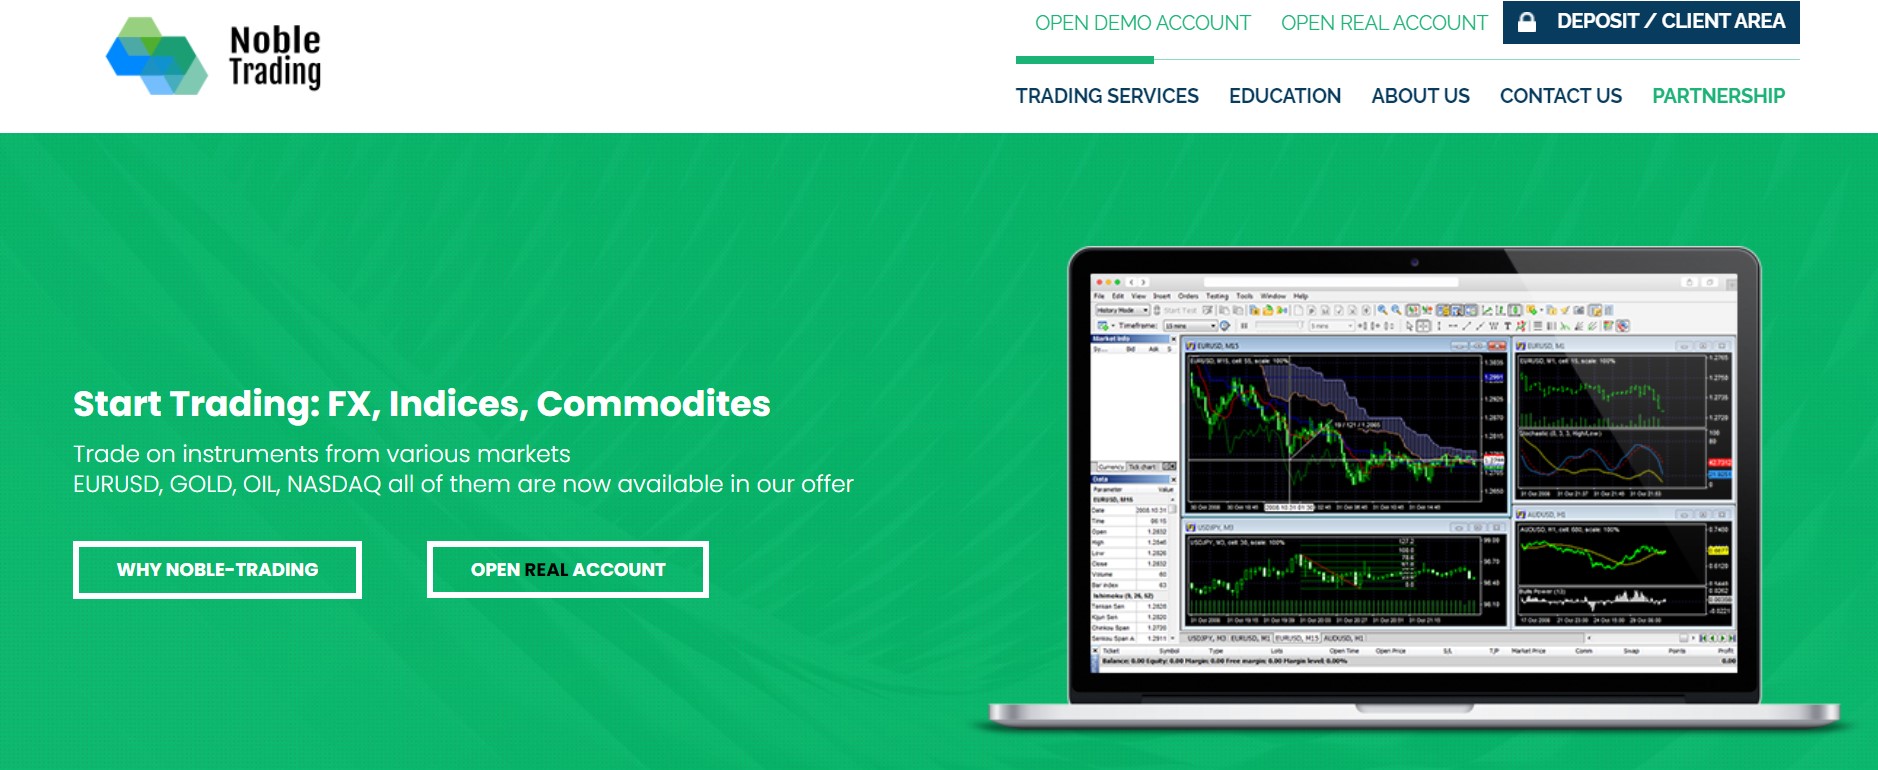 Noble-Trading website